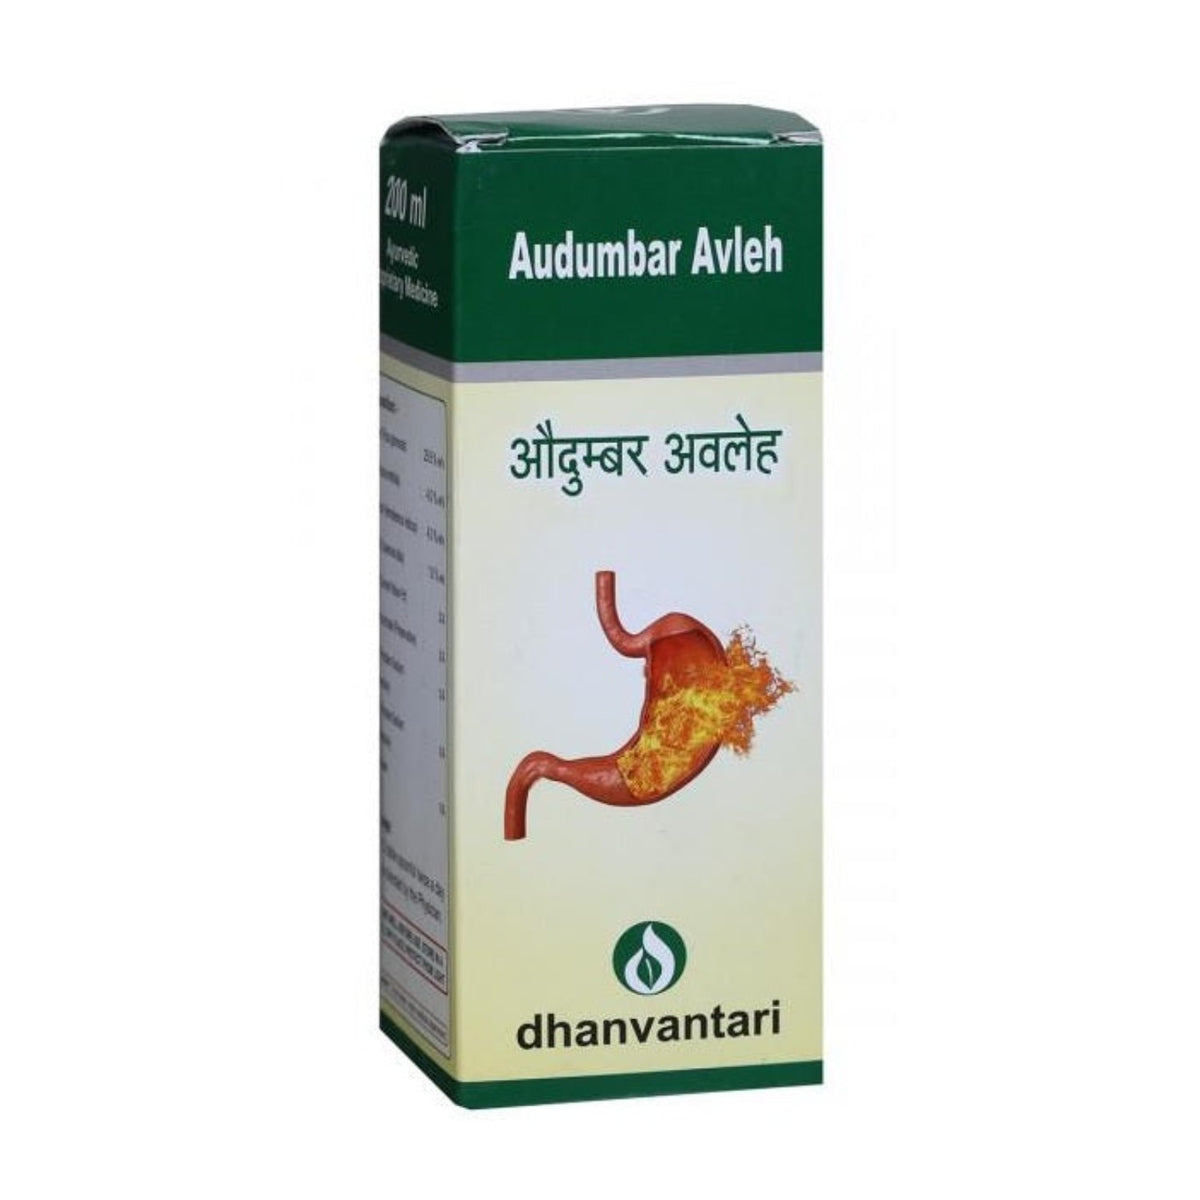 Dhanvantari Ayurvedisches Audumbar Nützlich bei Hyperazidität Avleh